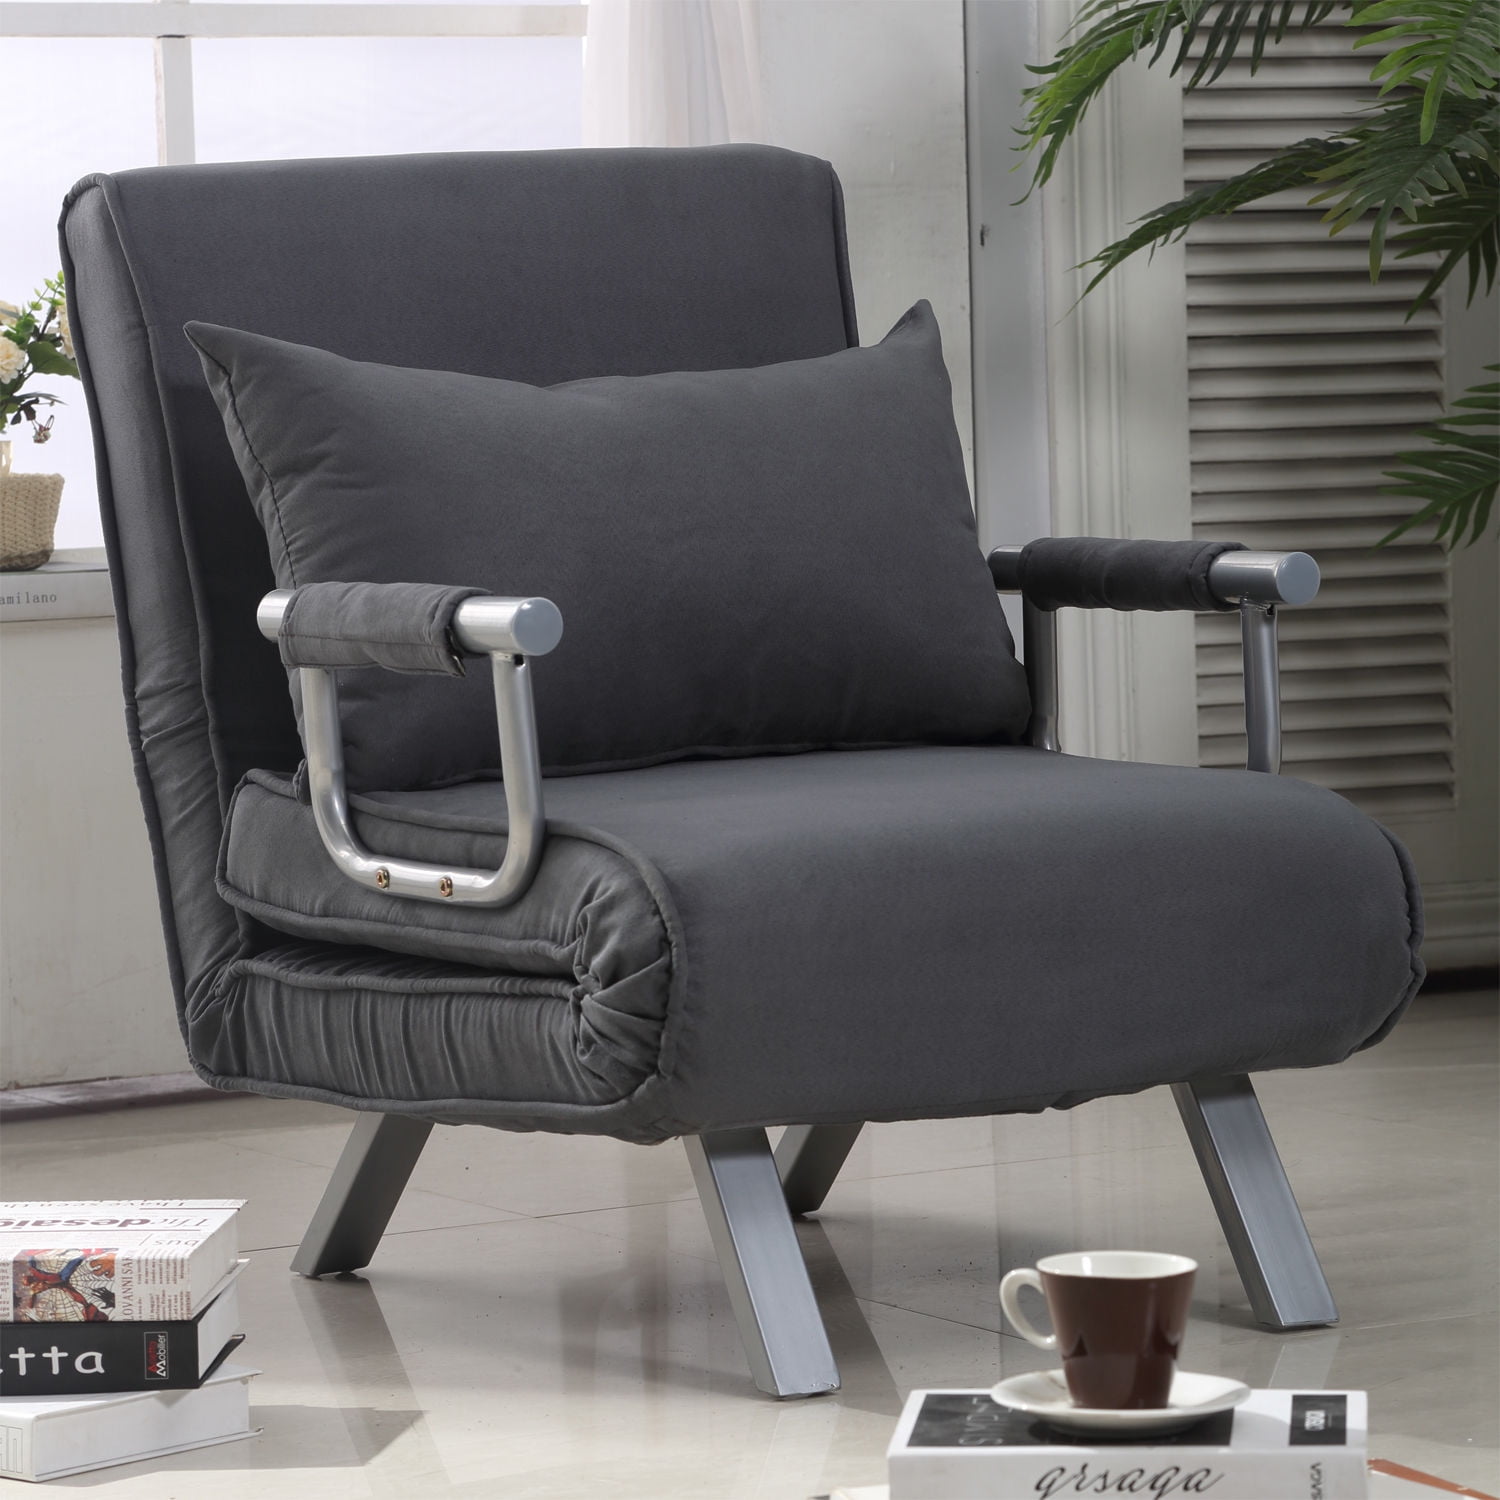 Homcom Suede Convertible Sleeper Chair, Homhum Convertible Sofa Bed Sleeper Chair